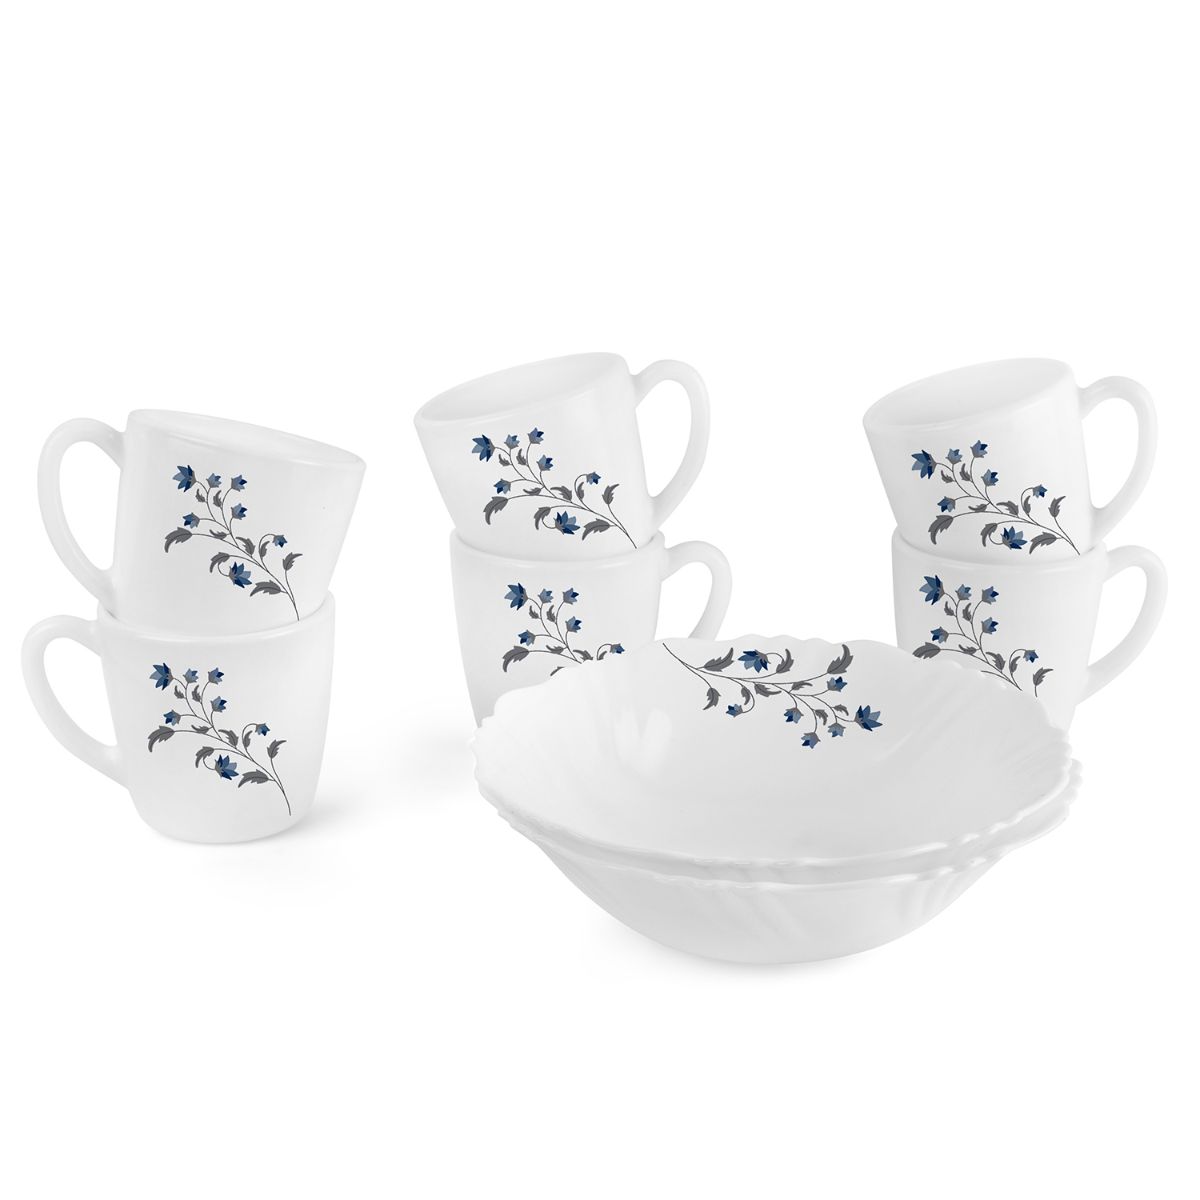 Imperial Series Quick Bite Bowl & Mug Gift set, 8 Pieces Vinea / 8 Pieces